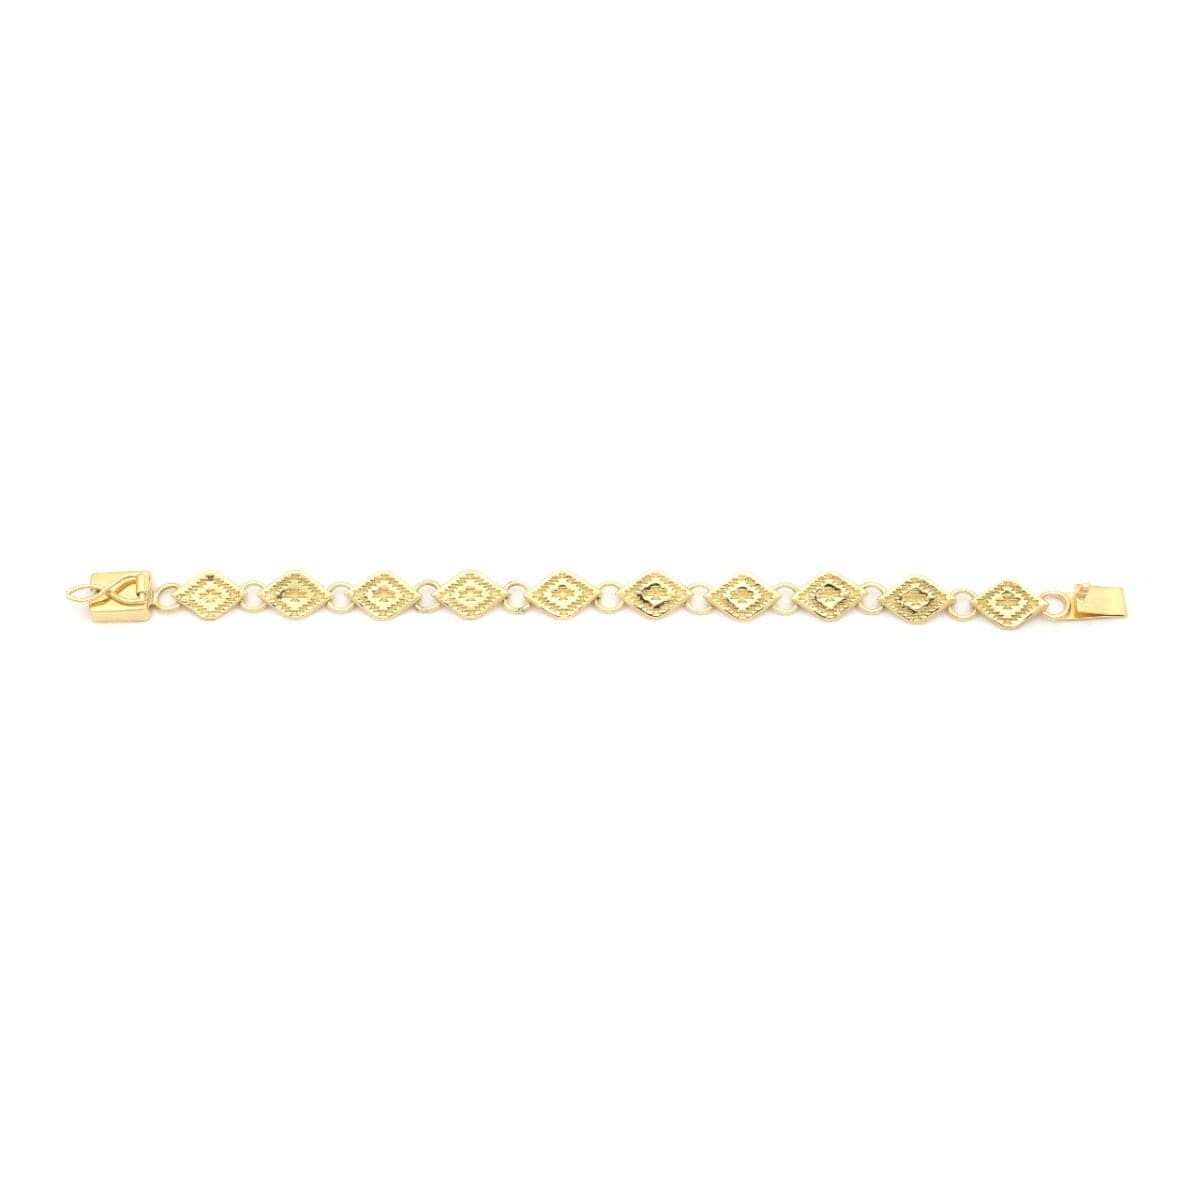 Mark Sublette Collection - Featuring Sam Patania - 18K Gold Link Bracelet, size 7 (J13272) 1
